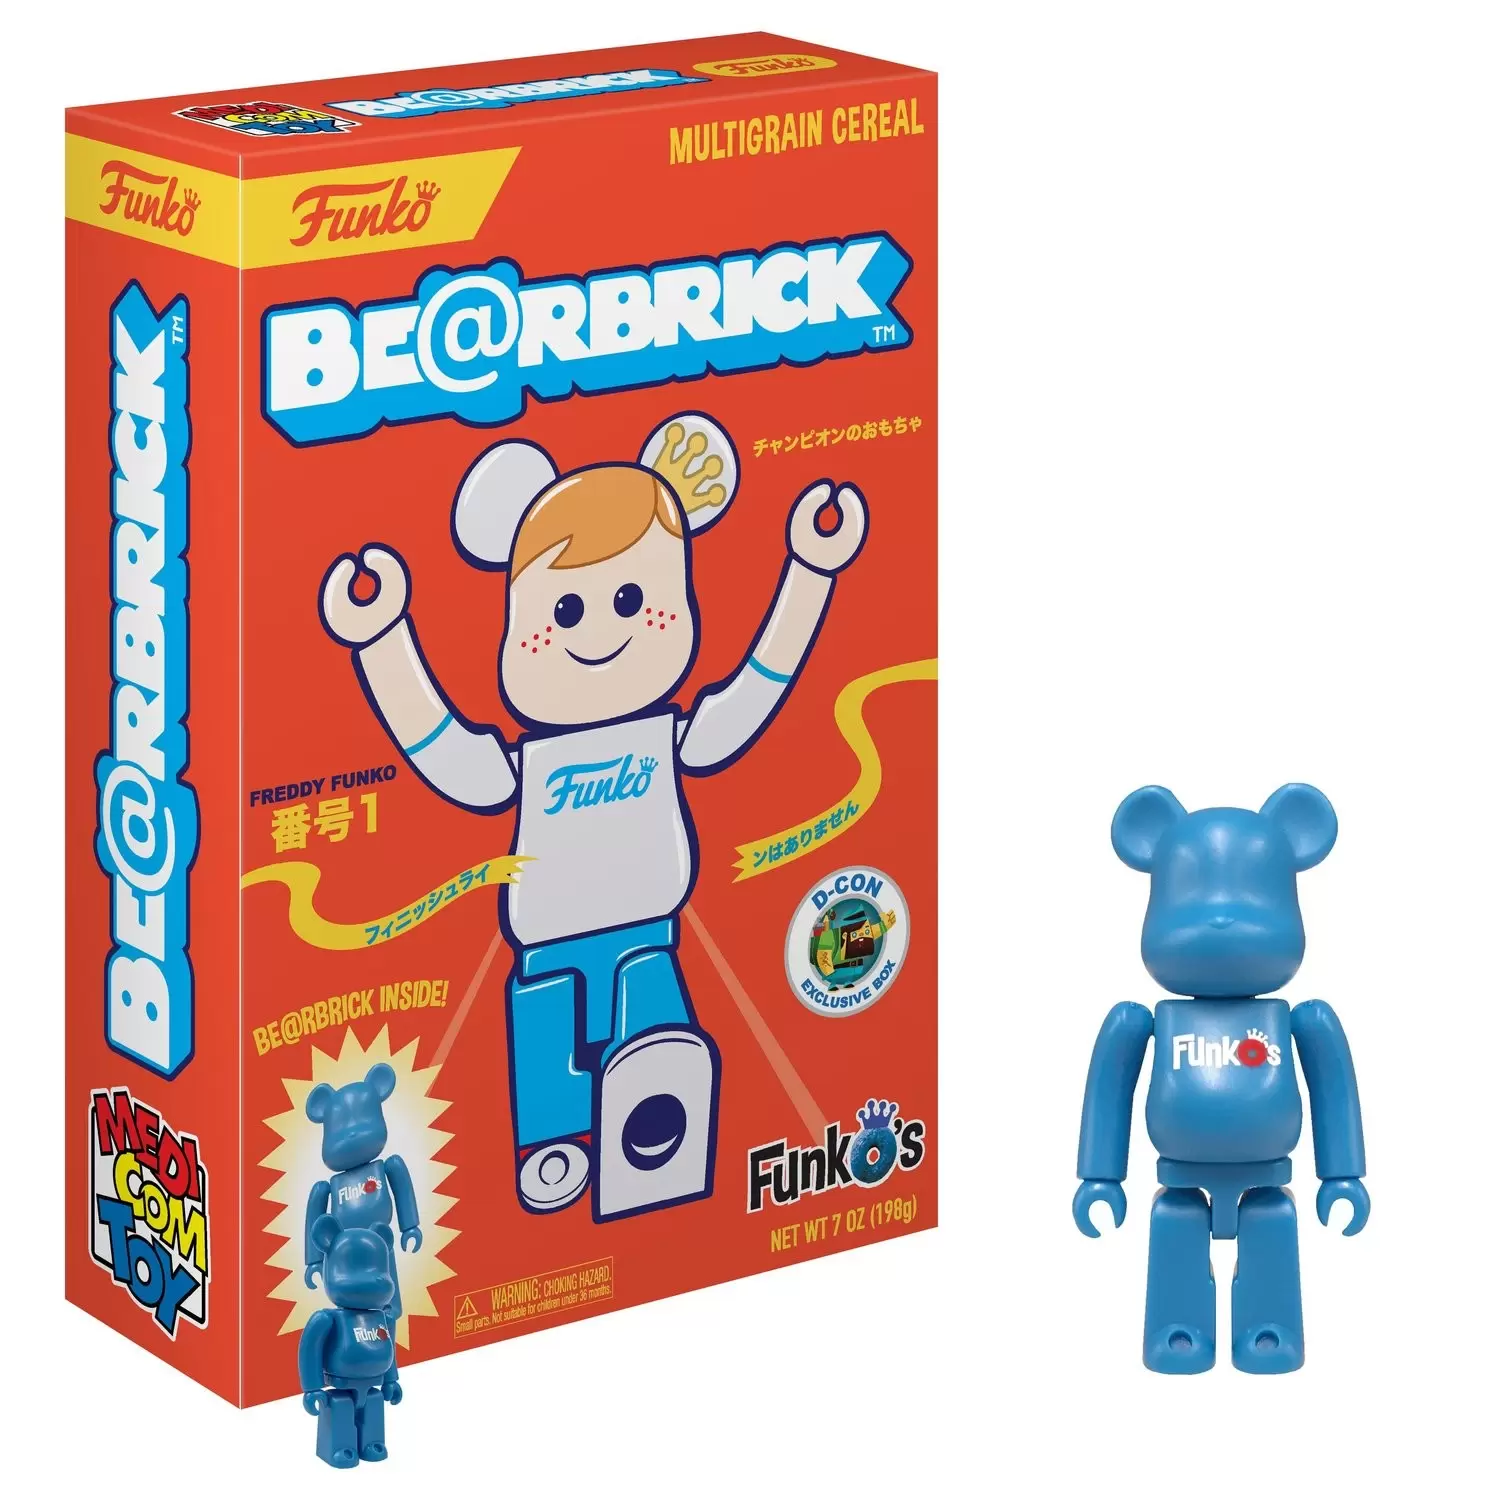 Pocket Pop! and Pop Minis! - Funko - BearBrick Freddy Funko